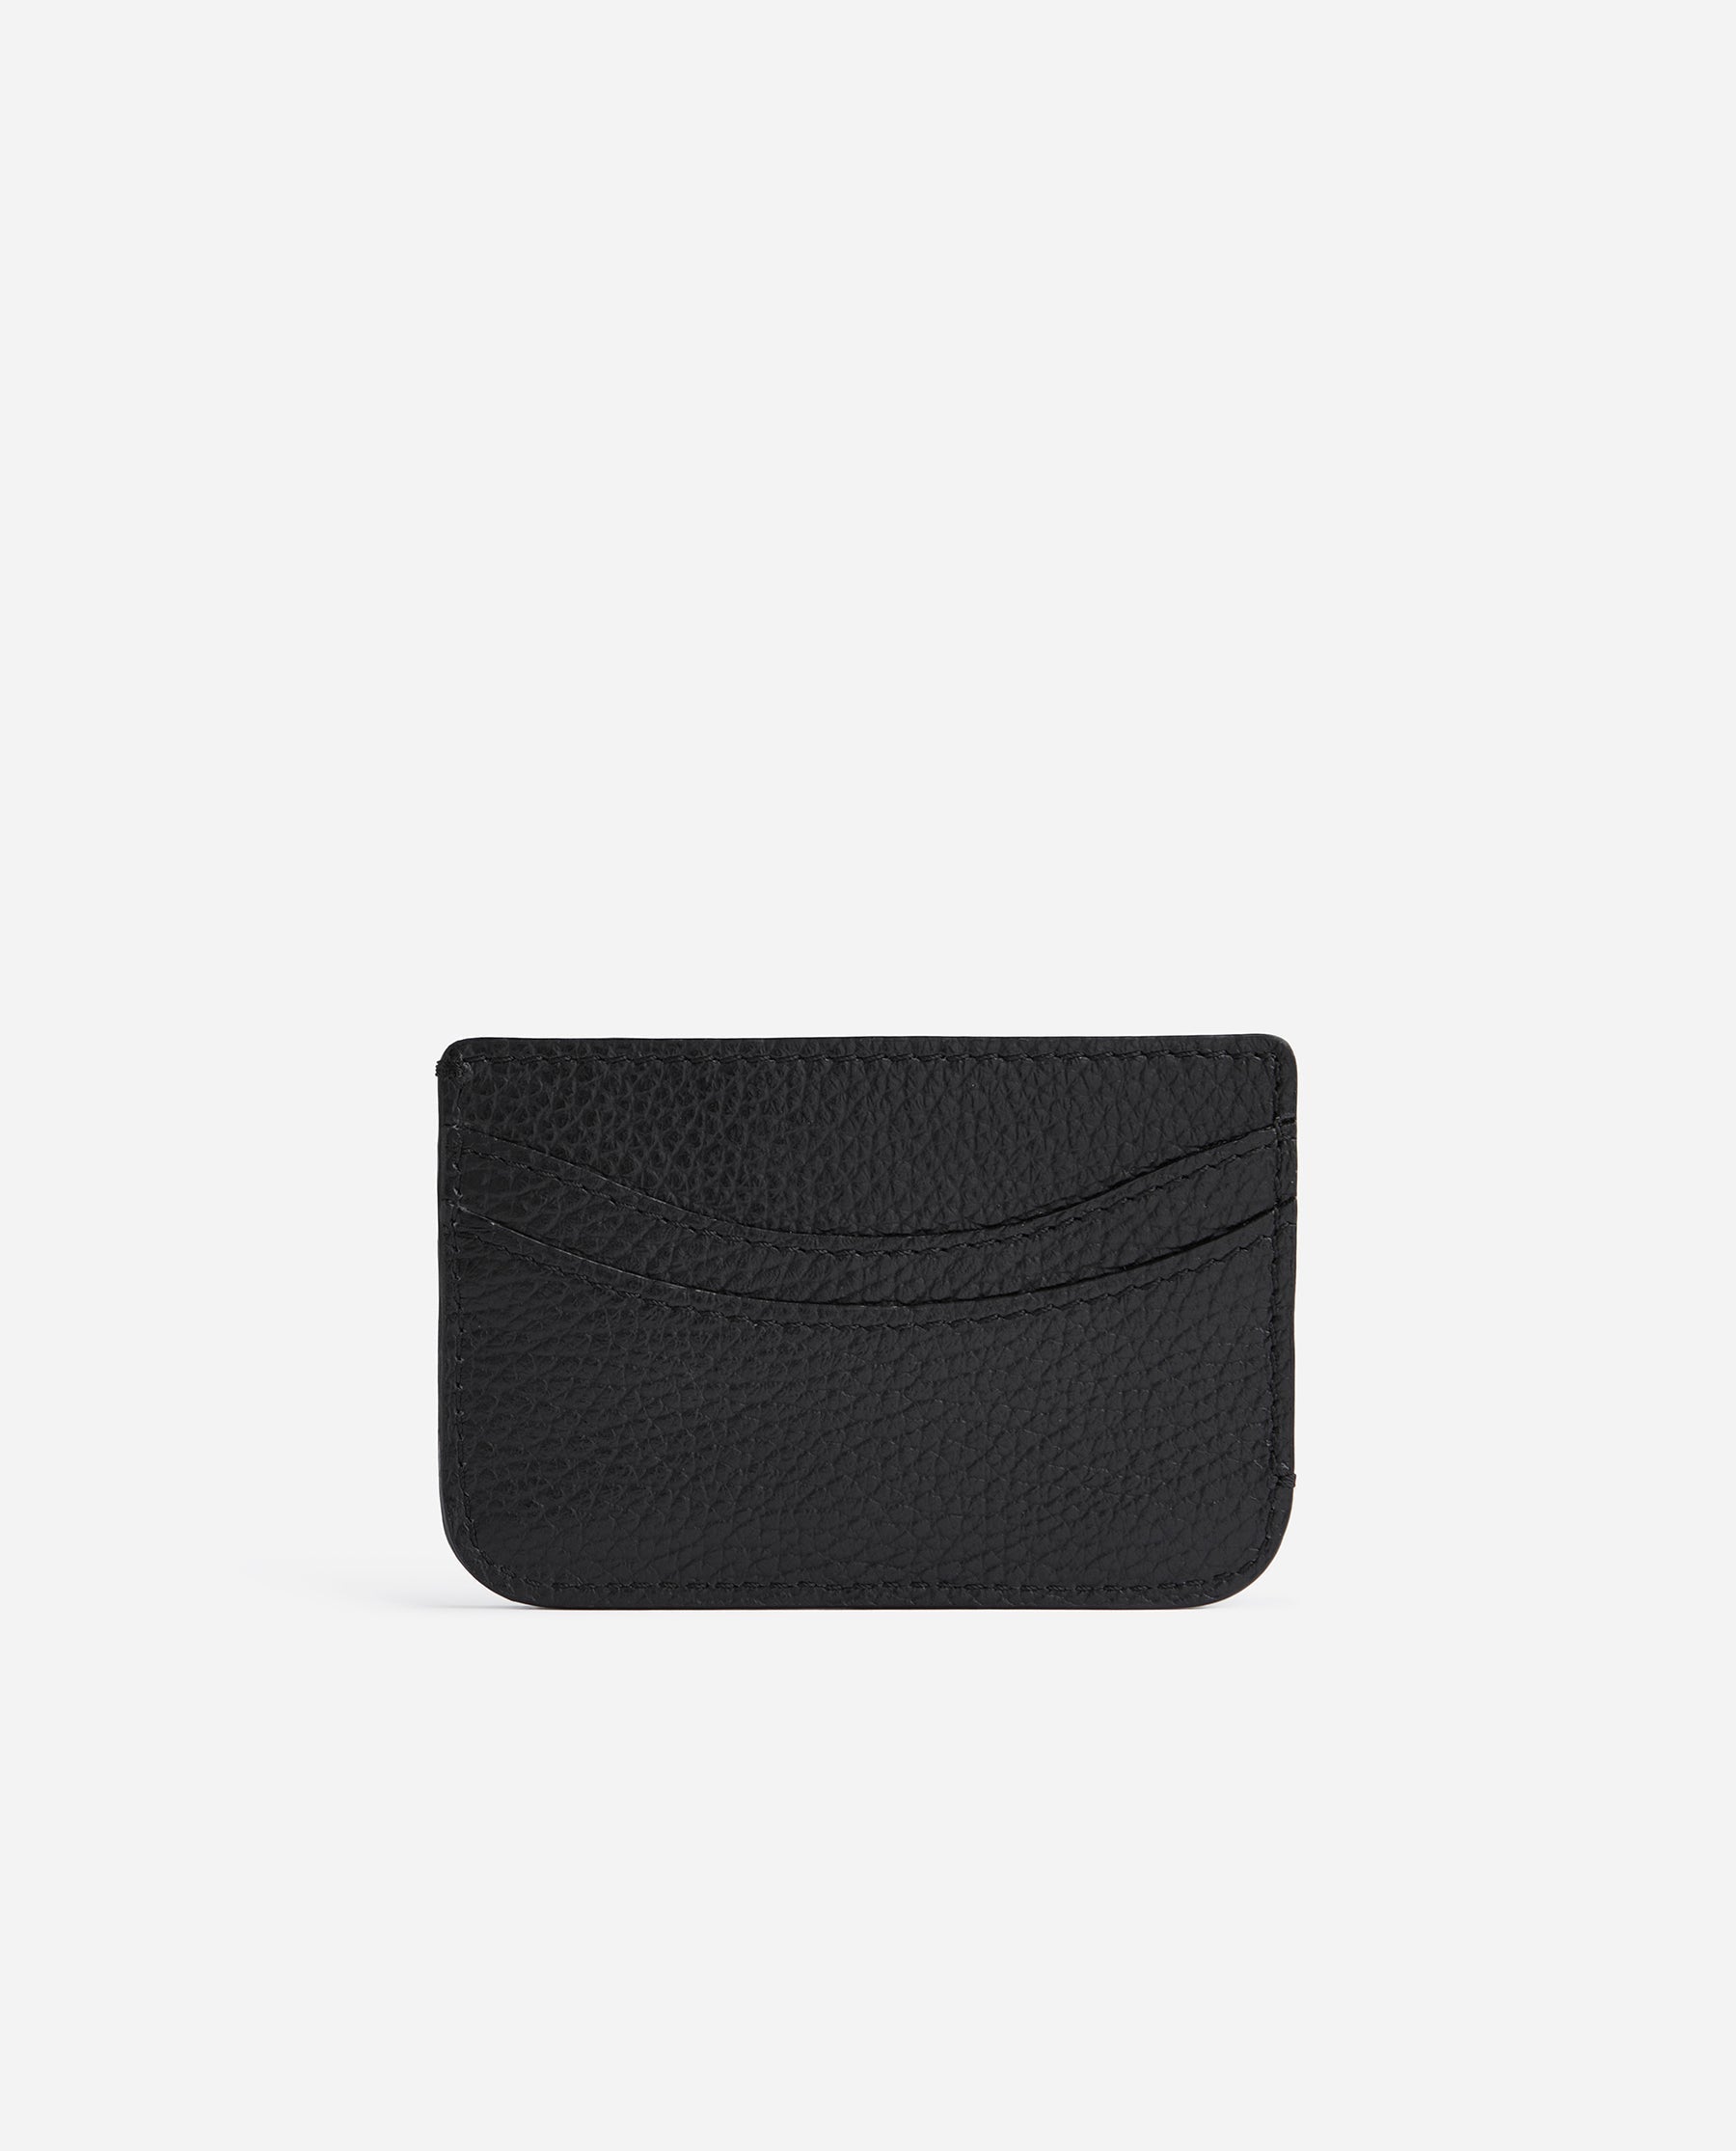 Flattered-OUTLET-SALE-Bonnie-Cardholder-Leather-Black-Taschen-Onesize-Black-Leather-ARCHIVE-COLLECTION.jpg